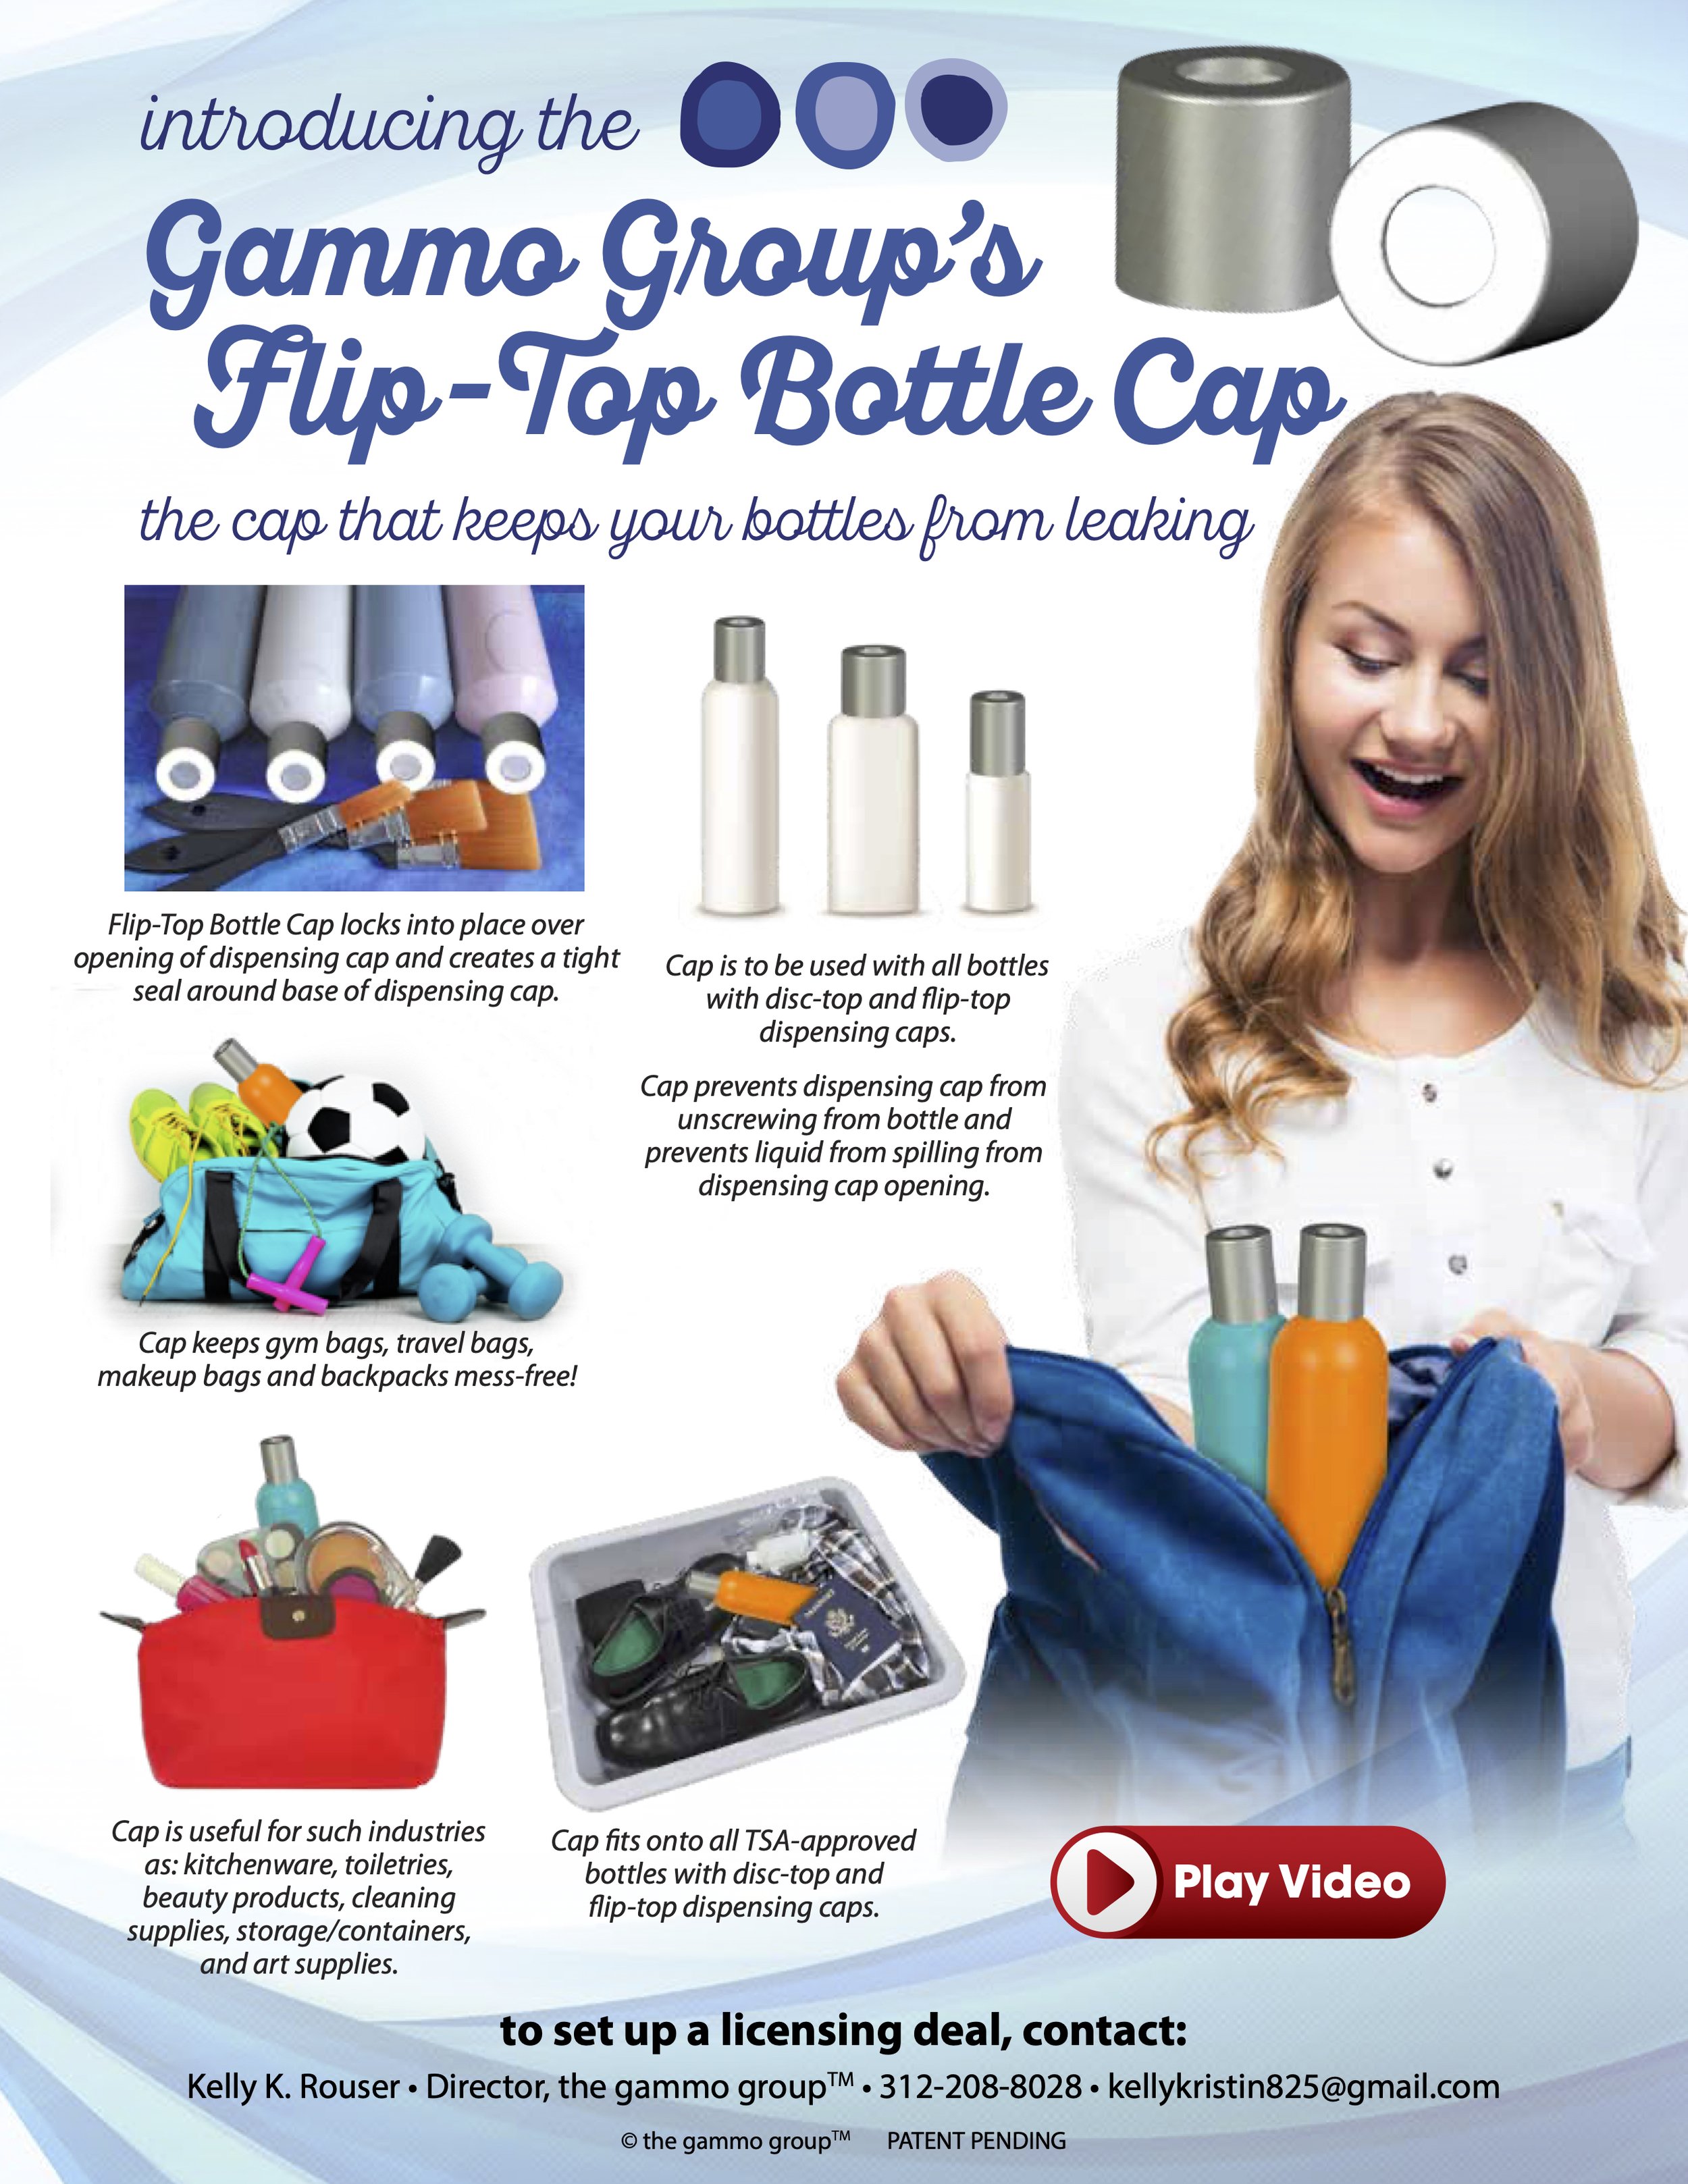 Sell Sheet for the Flip Top Bottle Cap